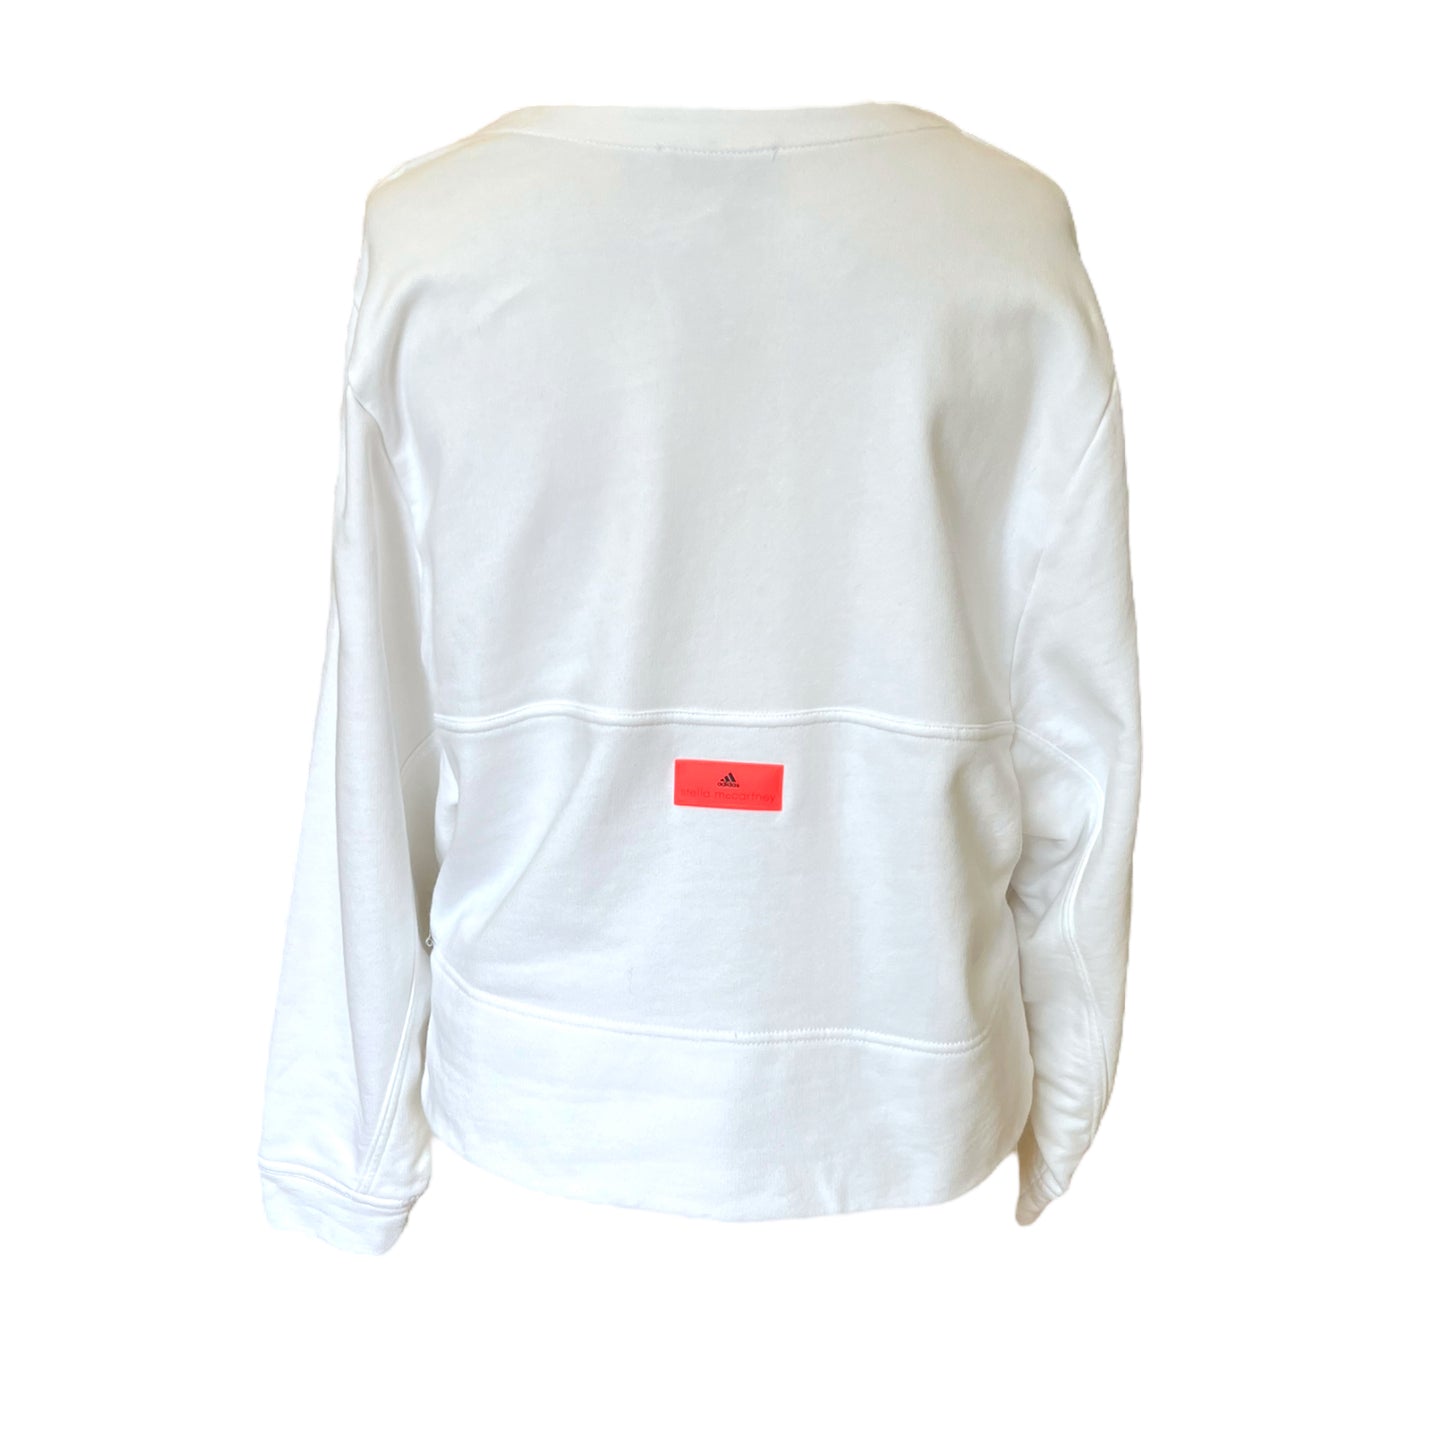 Stella McCartney X Adidas White Sweatshirt